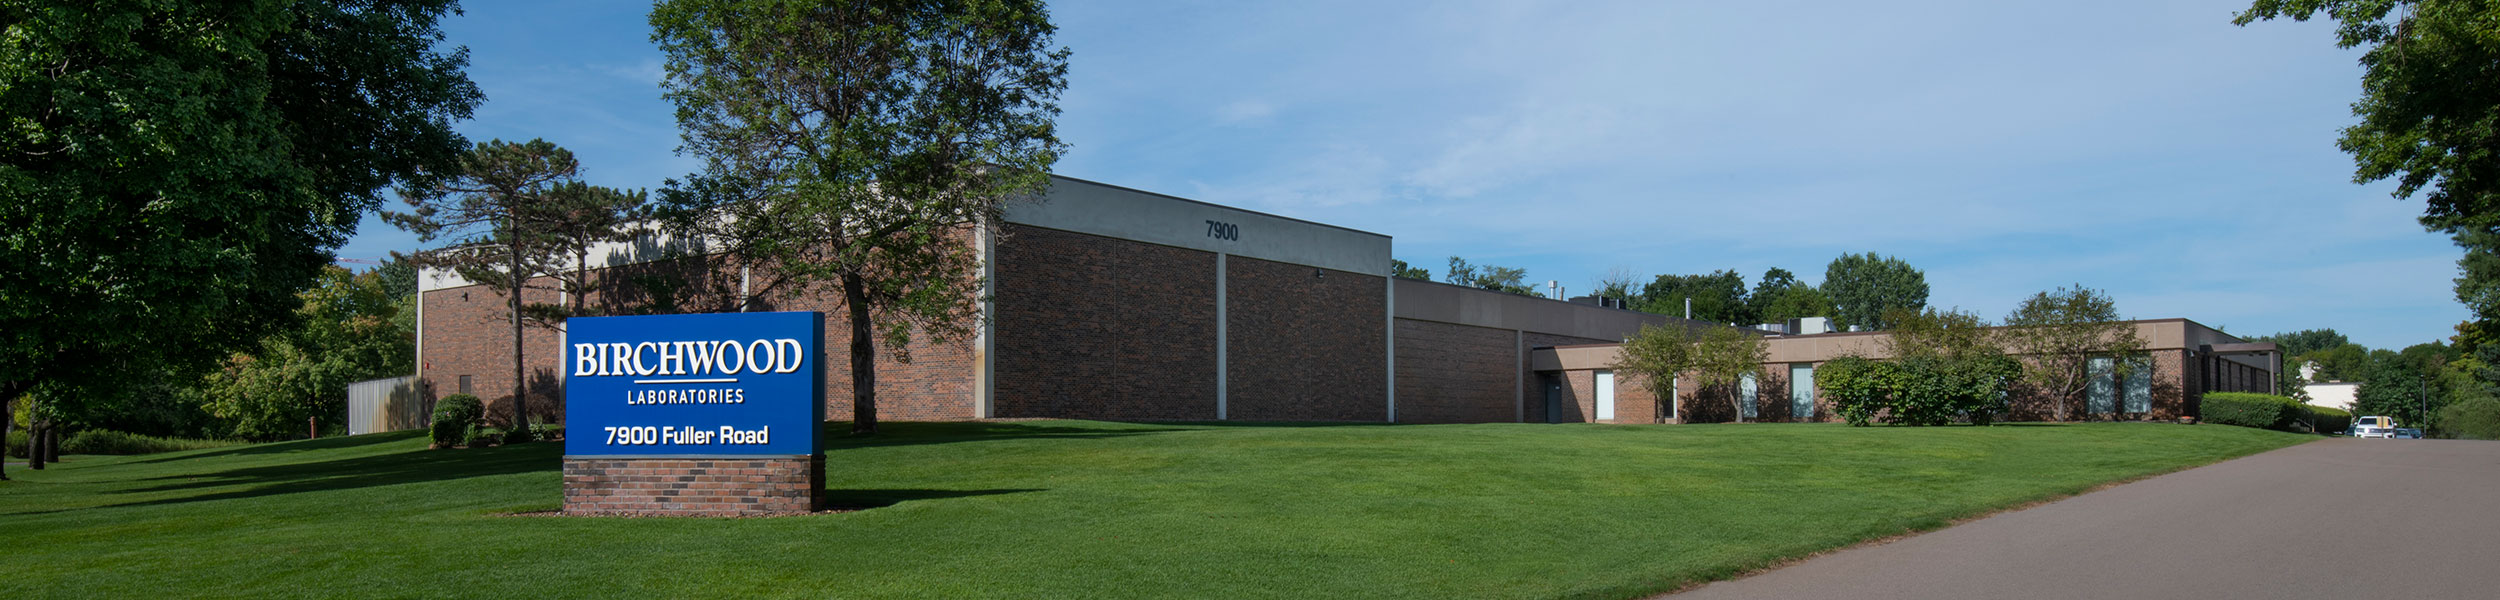 Birchwood Laboratories facility